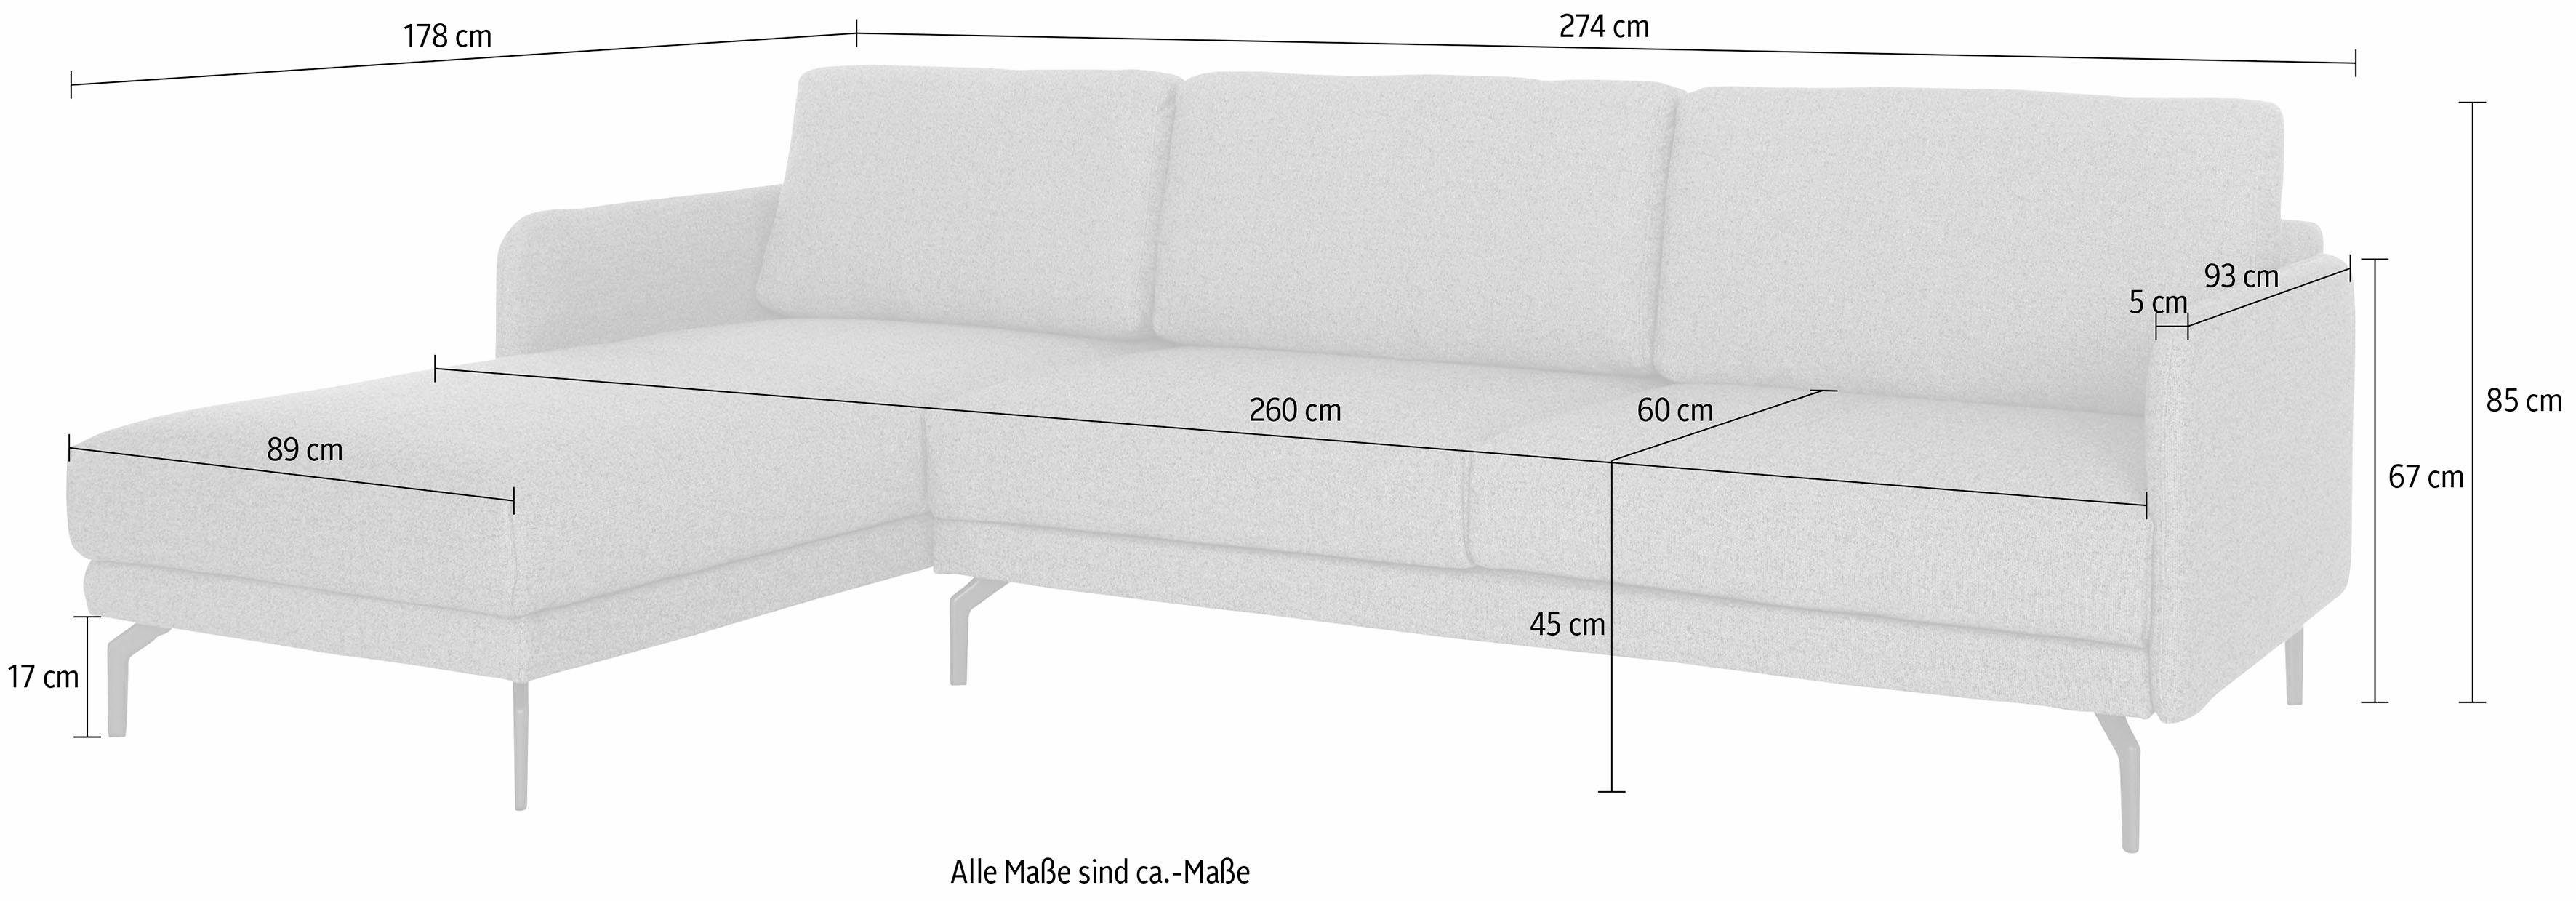 sehr Umbragrau hs.450, hülsta Breite cm, Armlehne sofa schmal, 274 Alugussfuß Ecksofa